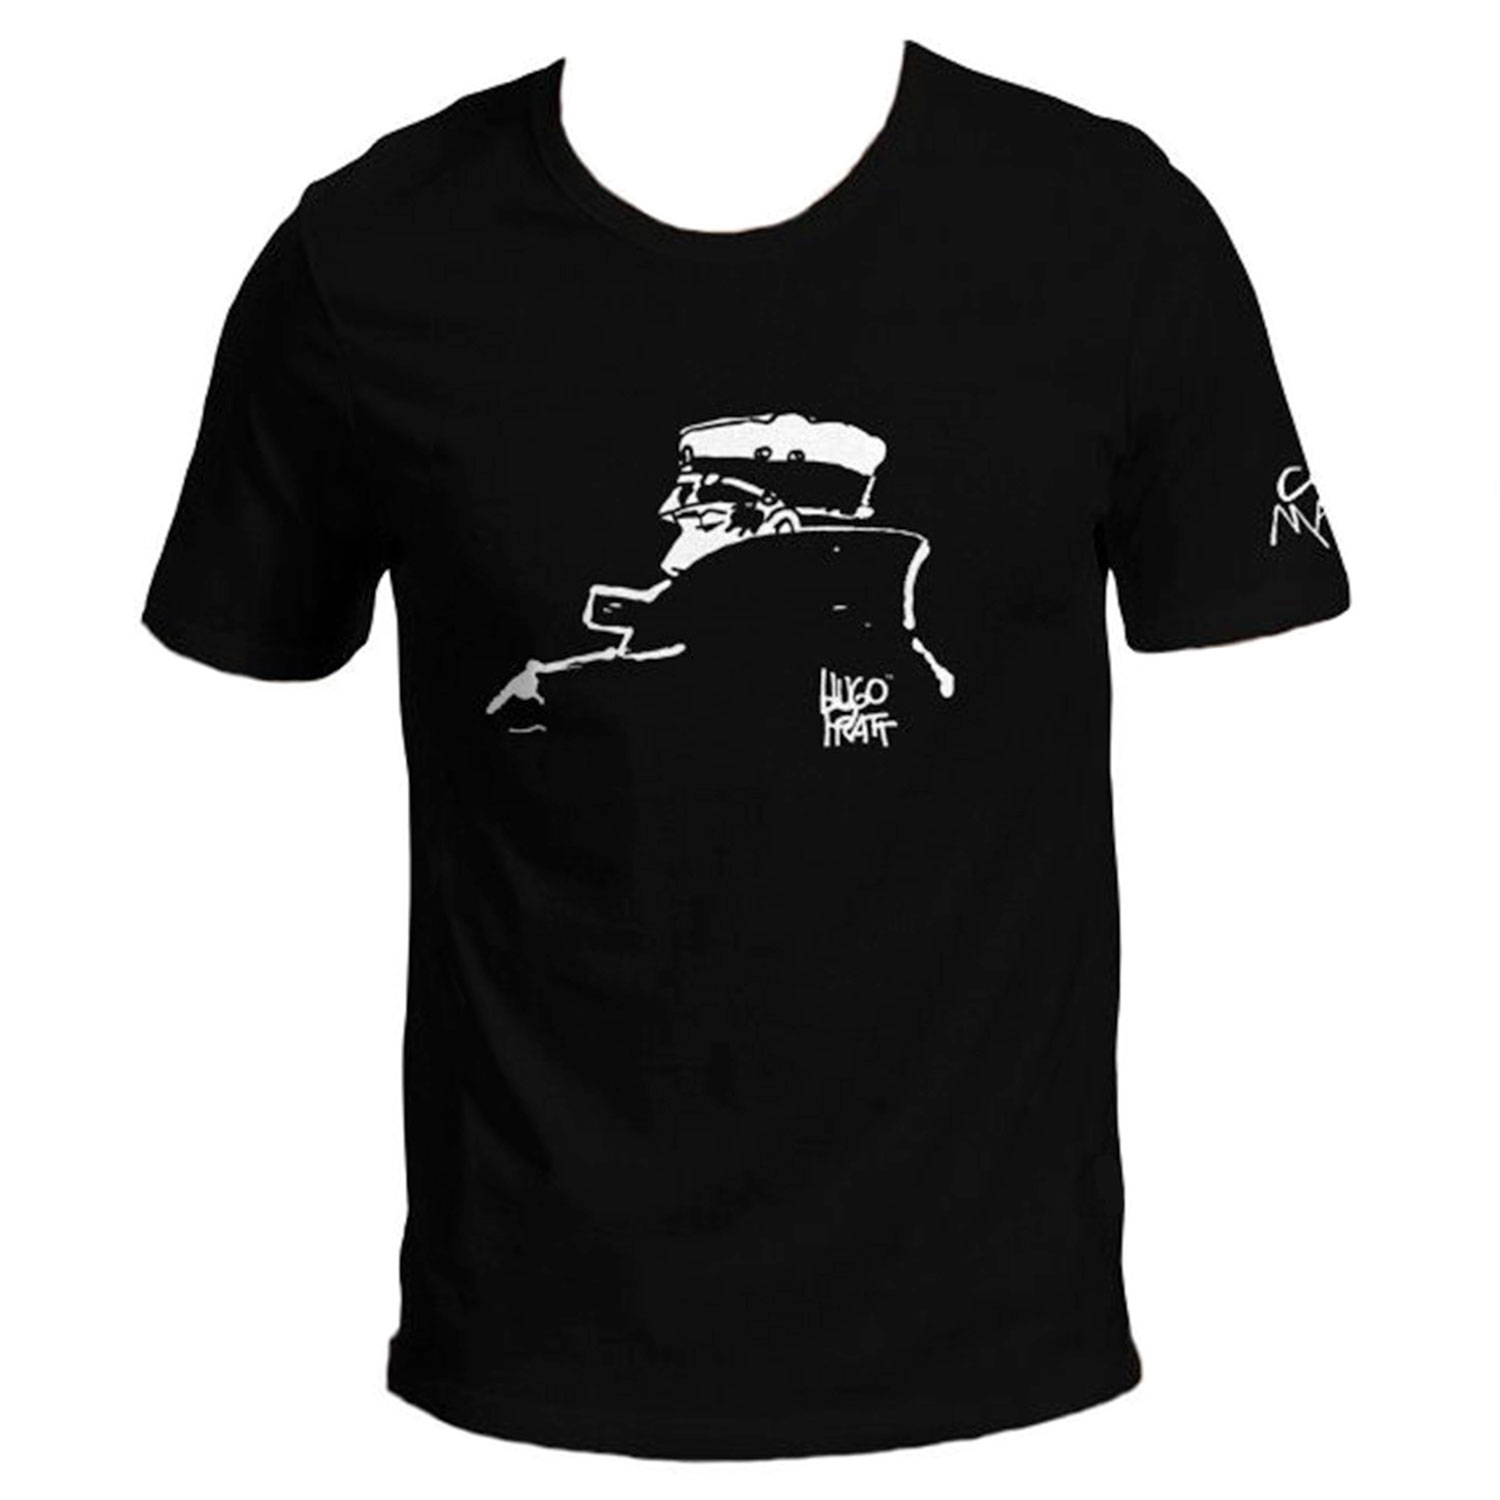 T-shirt Hugo Pratt : Corto Maltés, Nocturno - Negro - Tamaño S